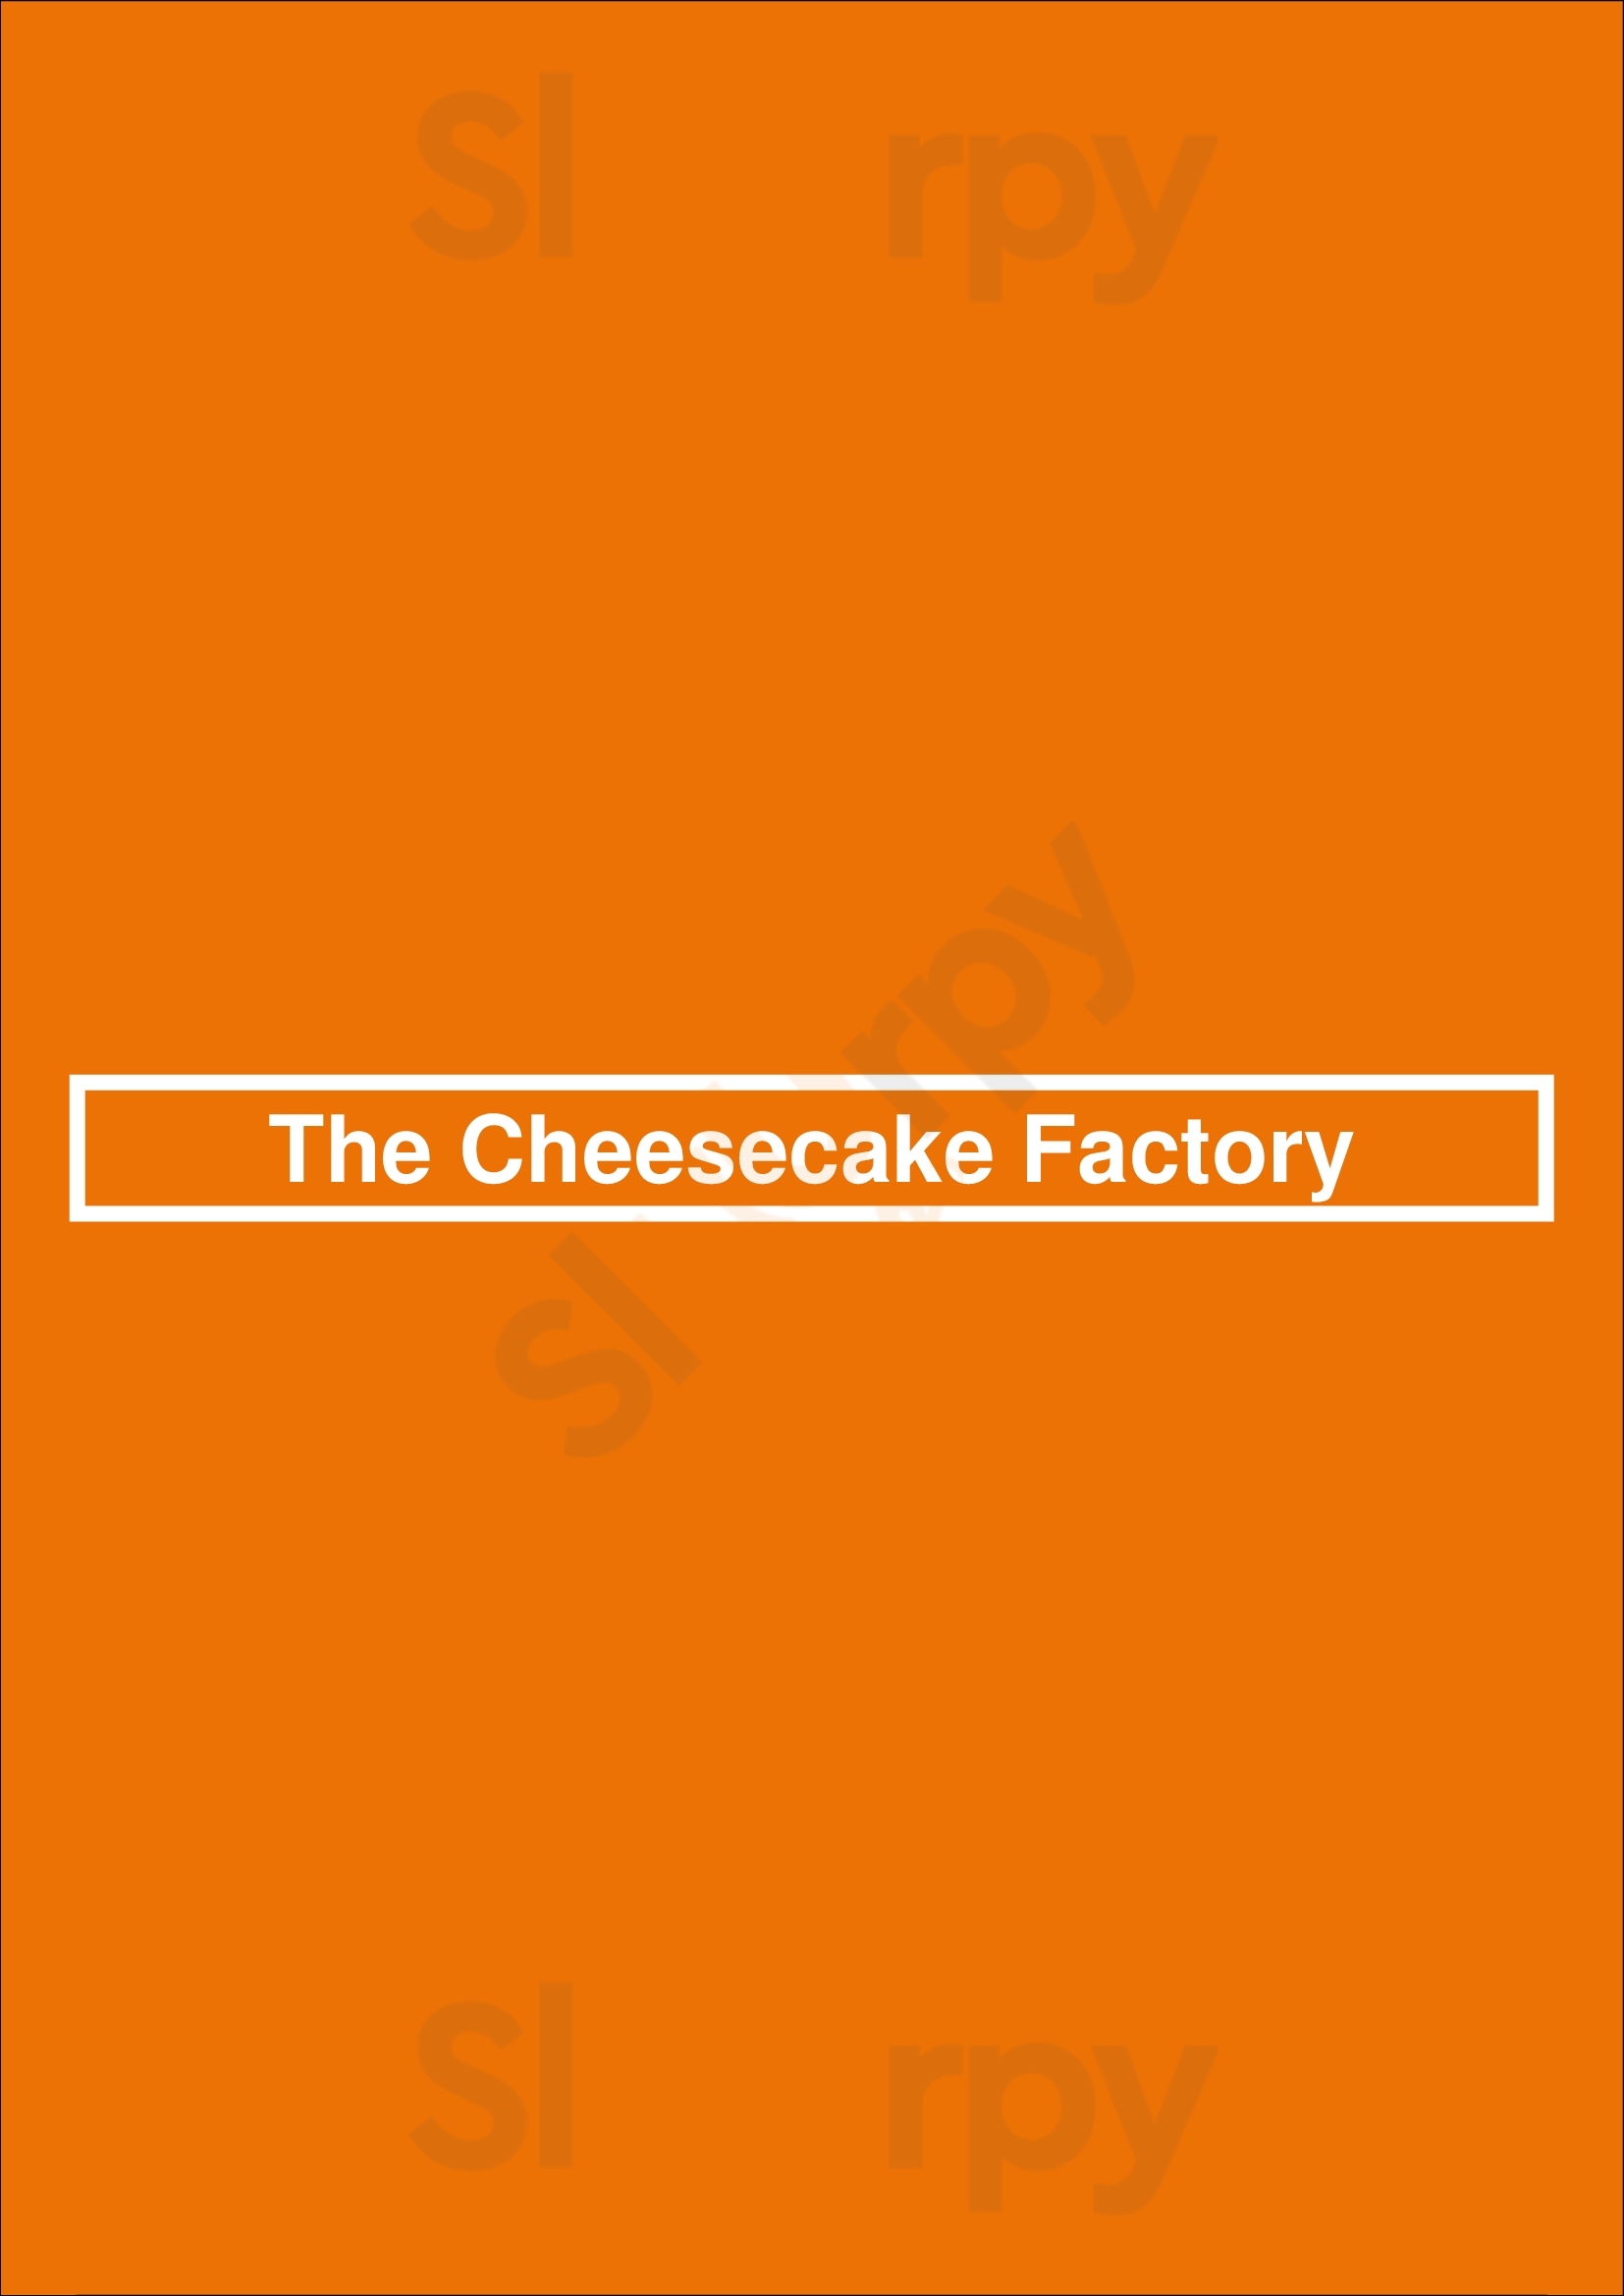 The Cheesecake Factory Las Vegas Menu - 1